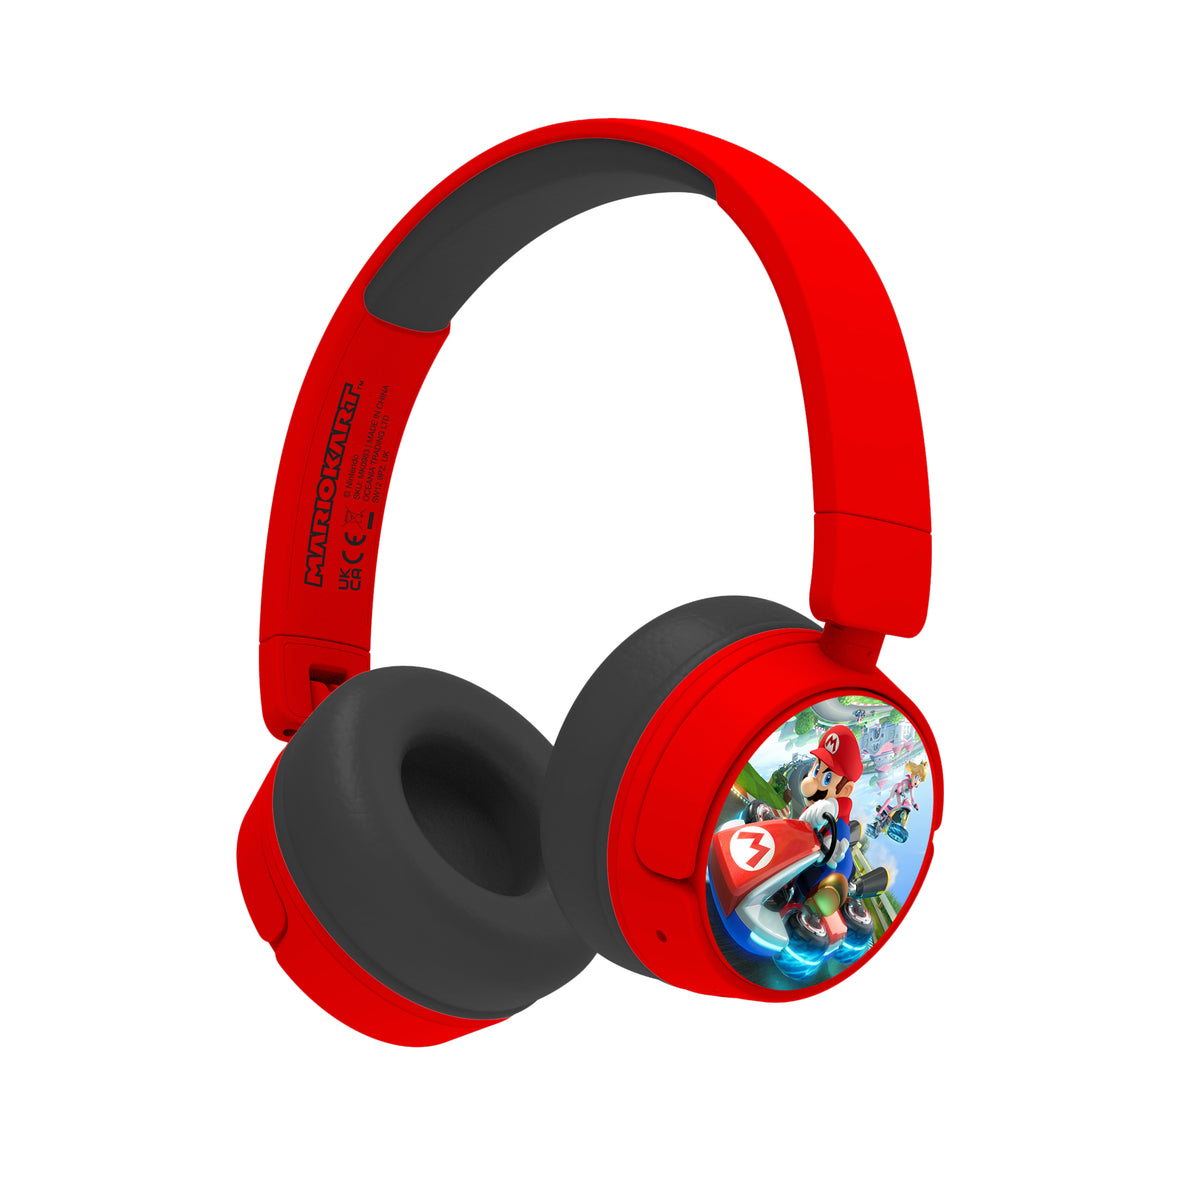 OTL Mario Kart Kids Over-Ear Wireless Headphones - Red | MK0983 from OTL - DID Electrical